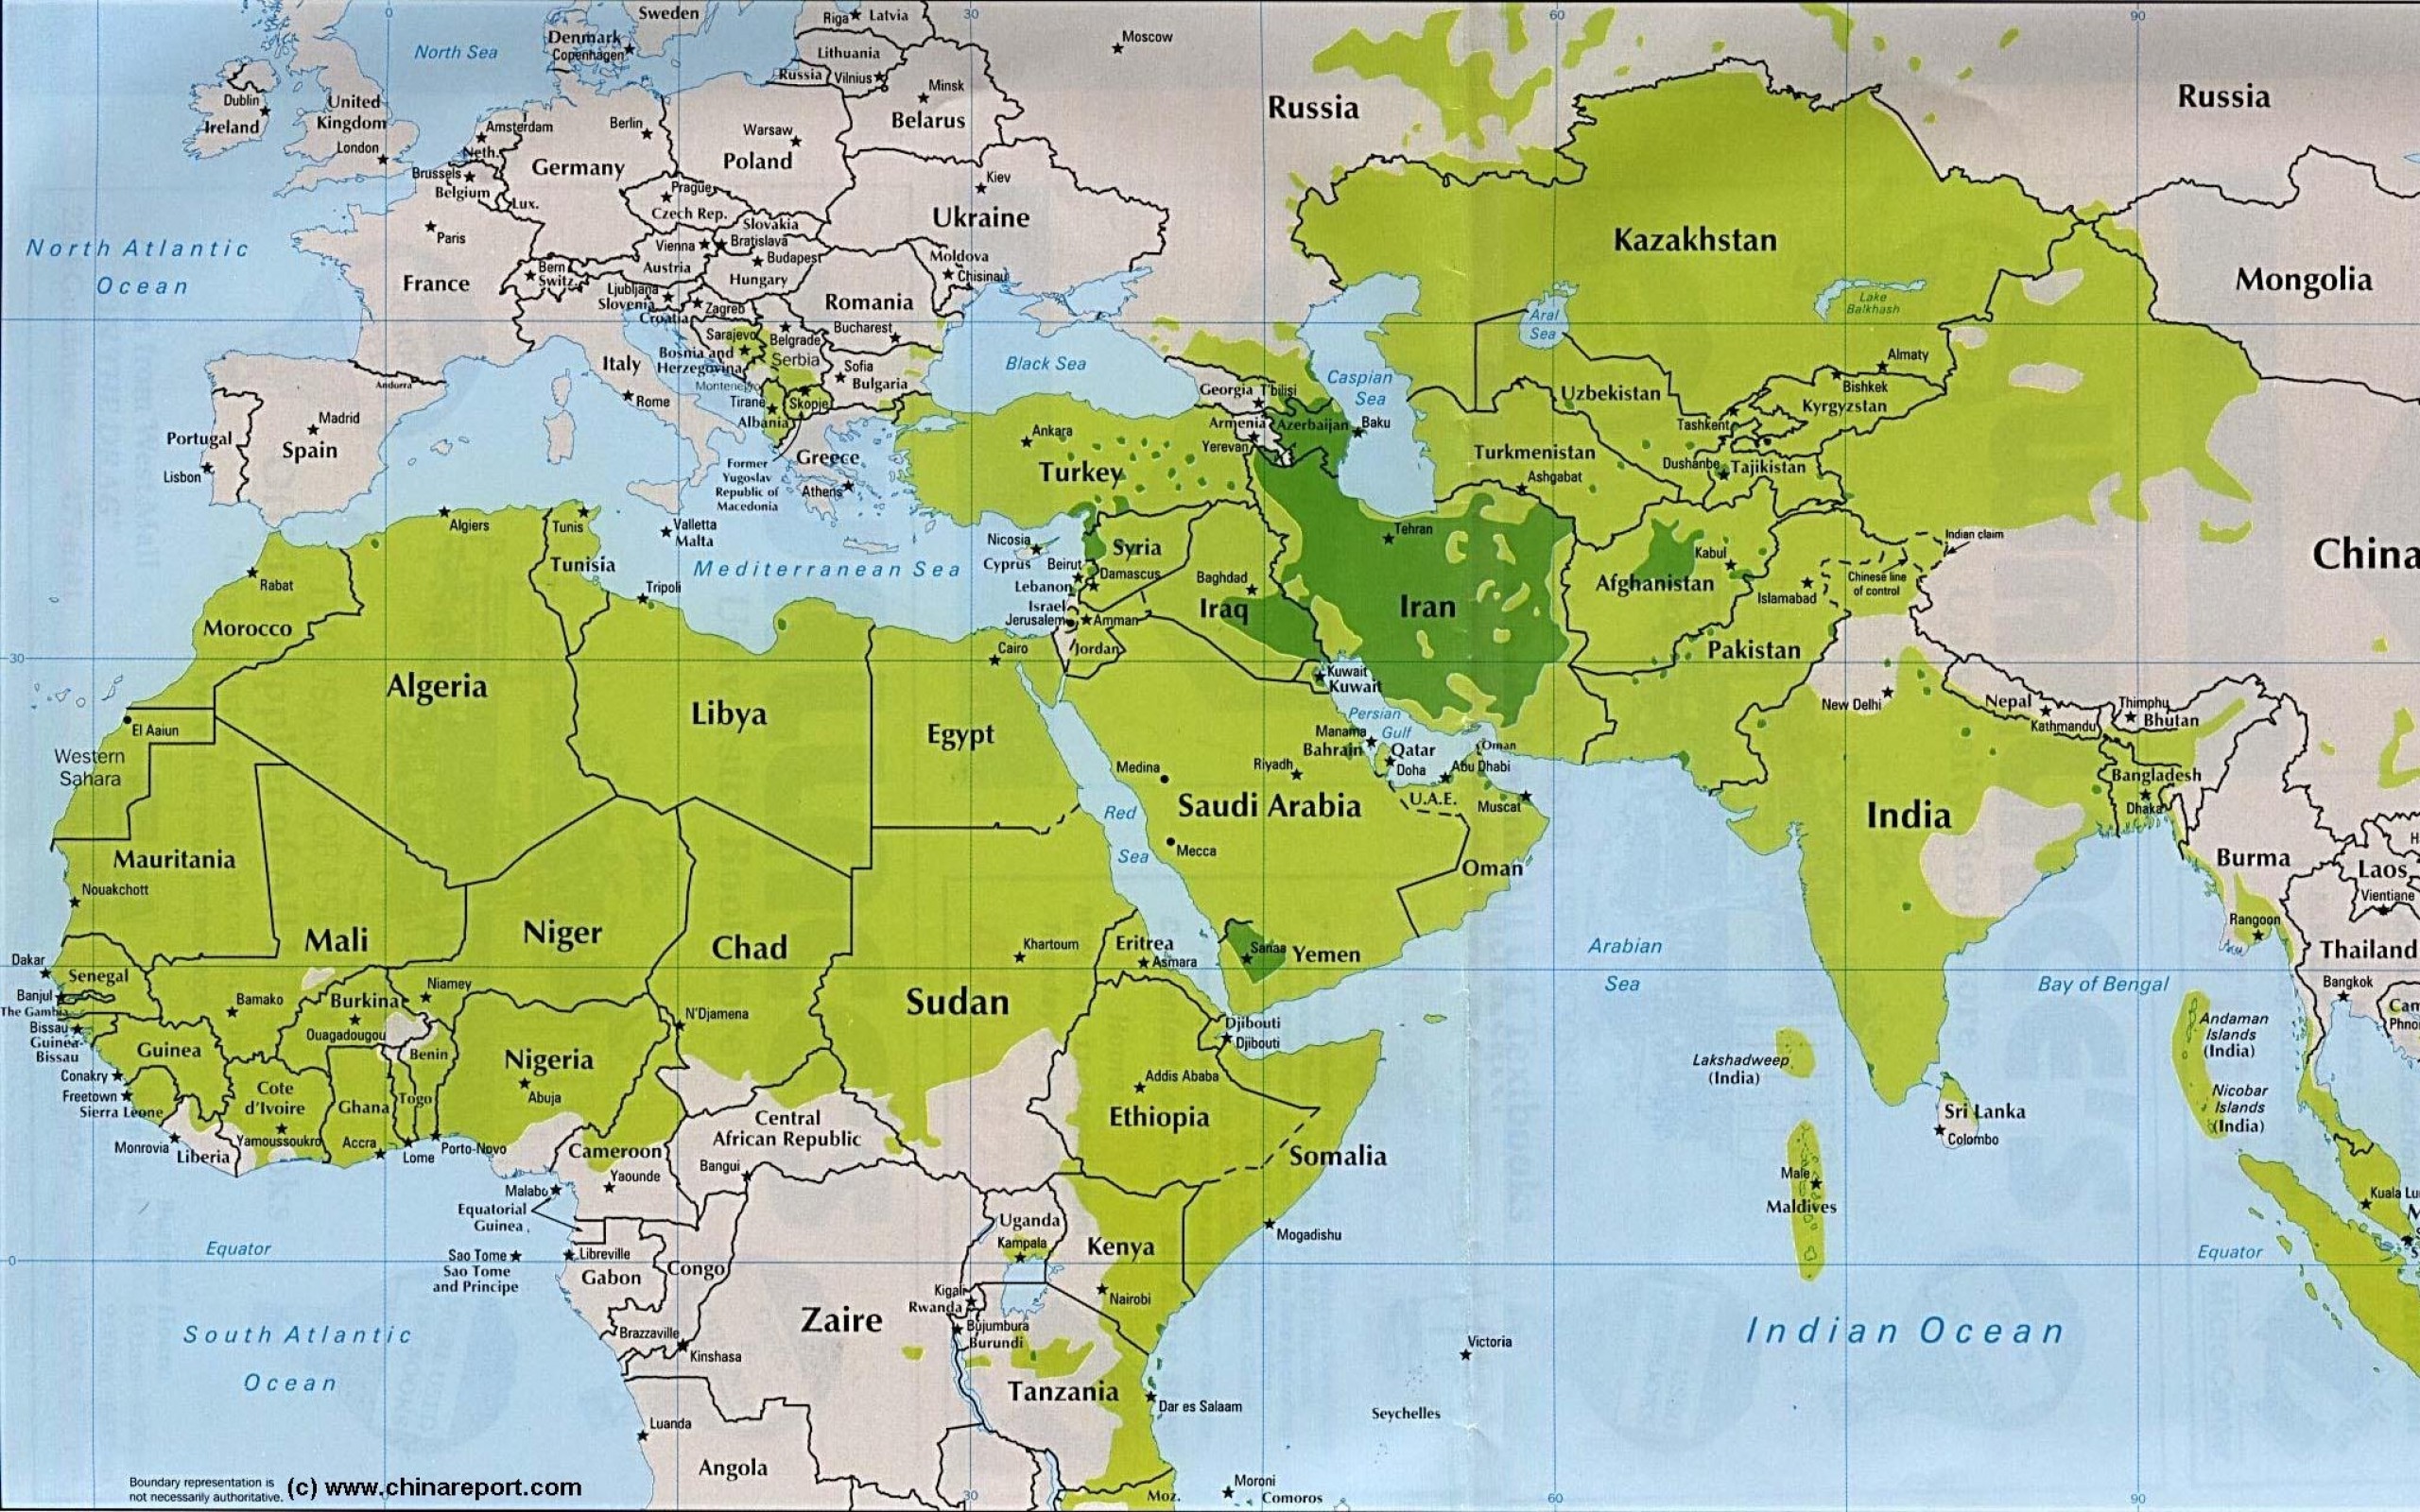 198-1984509_europe-maps-asia-islam-africa-middle-east-shia.jpg